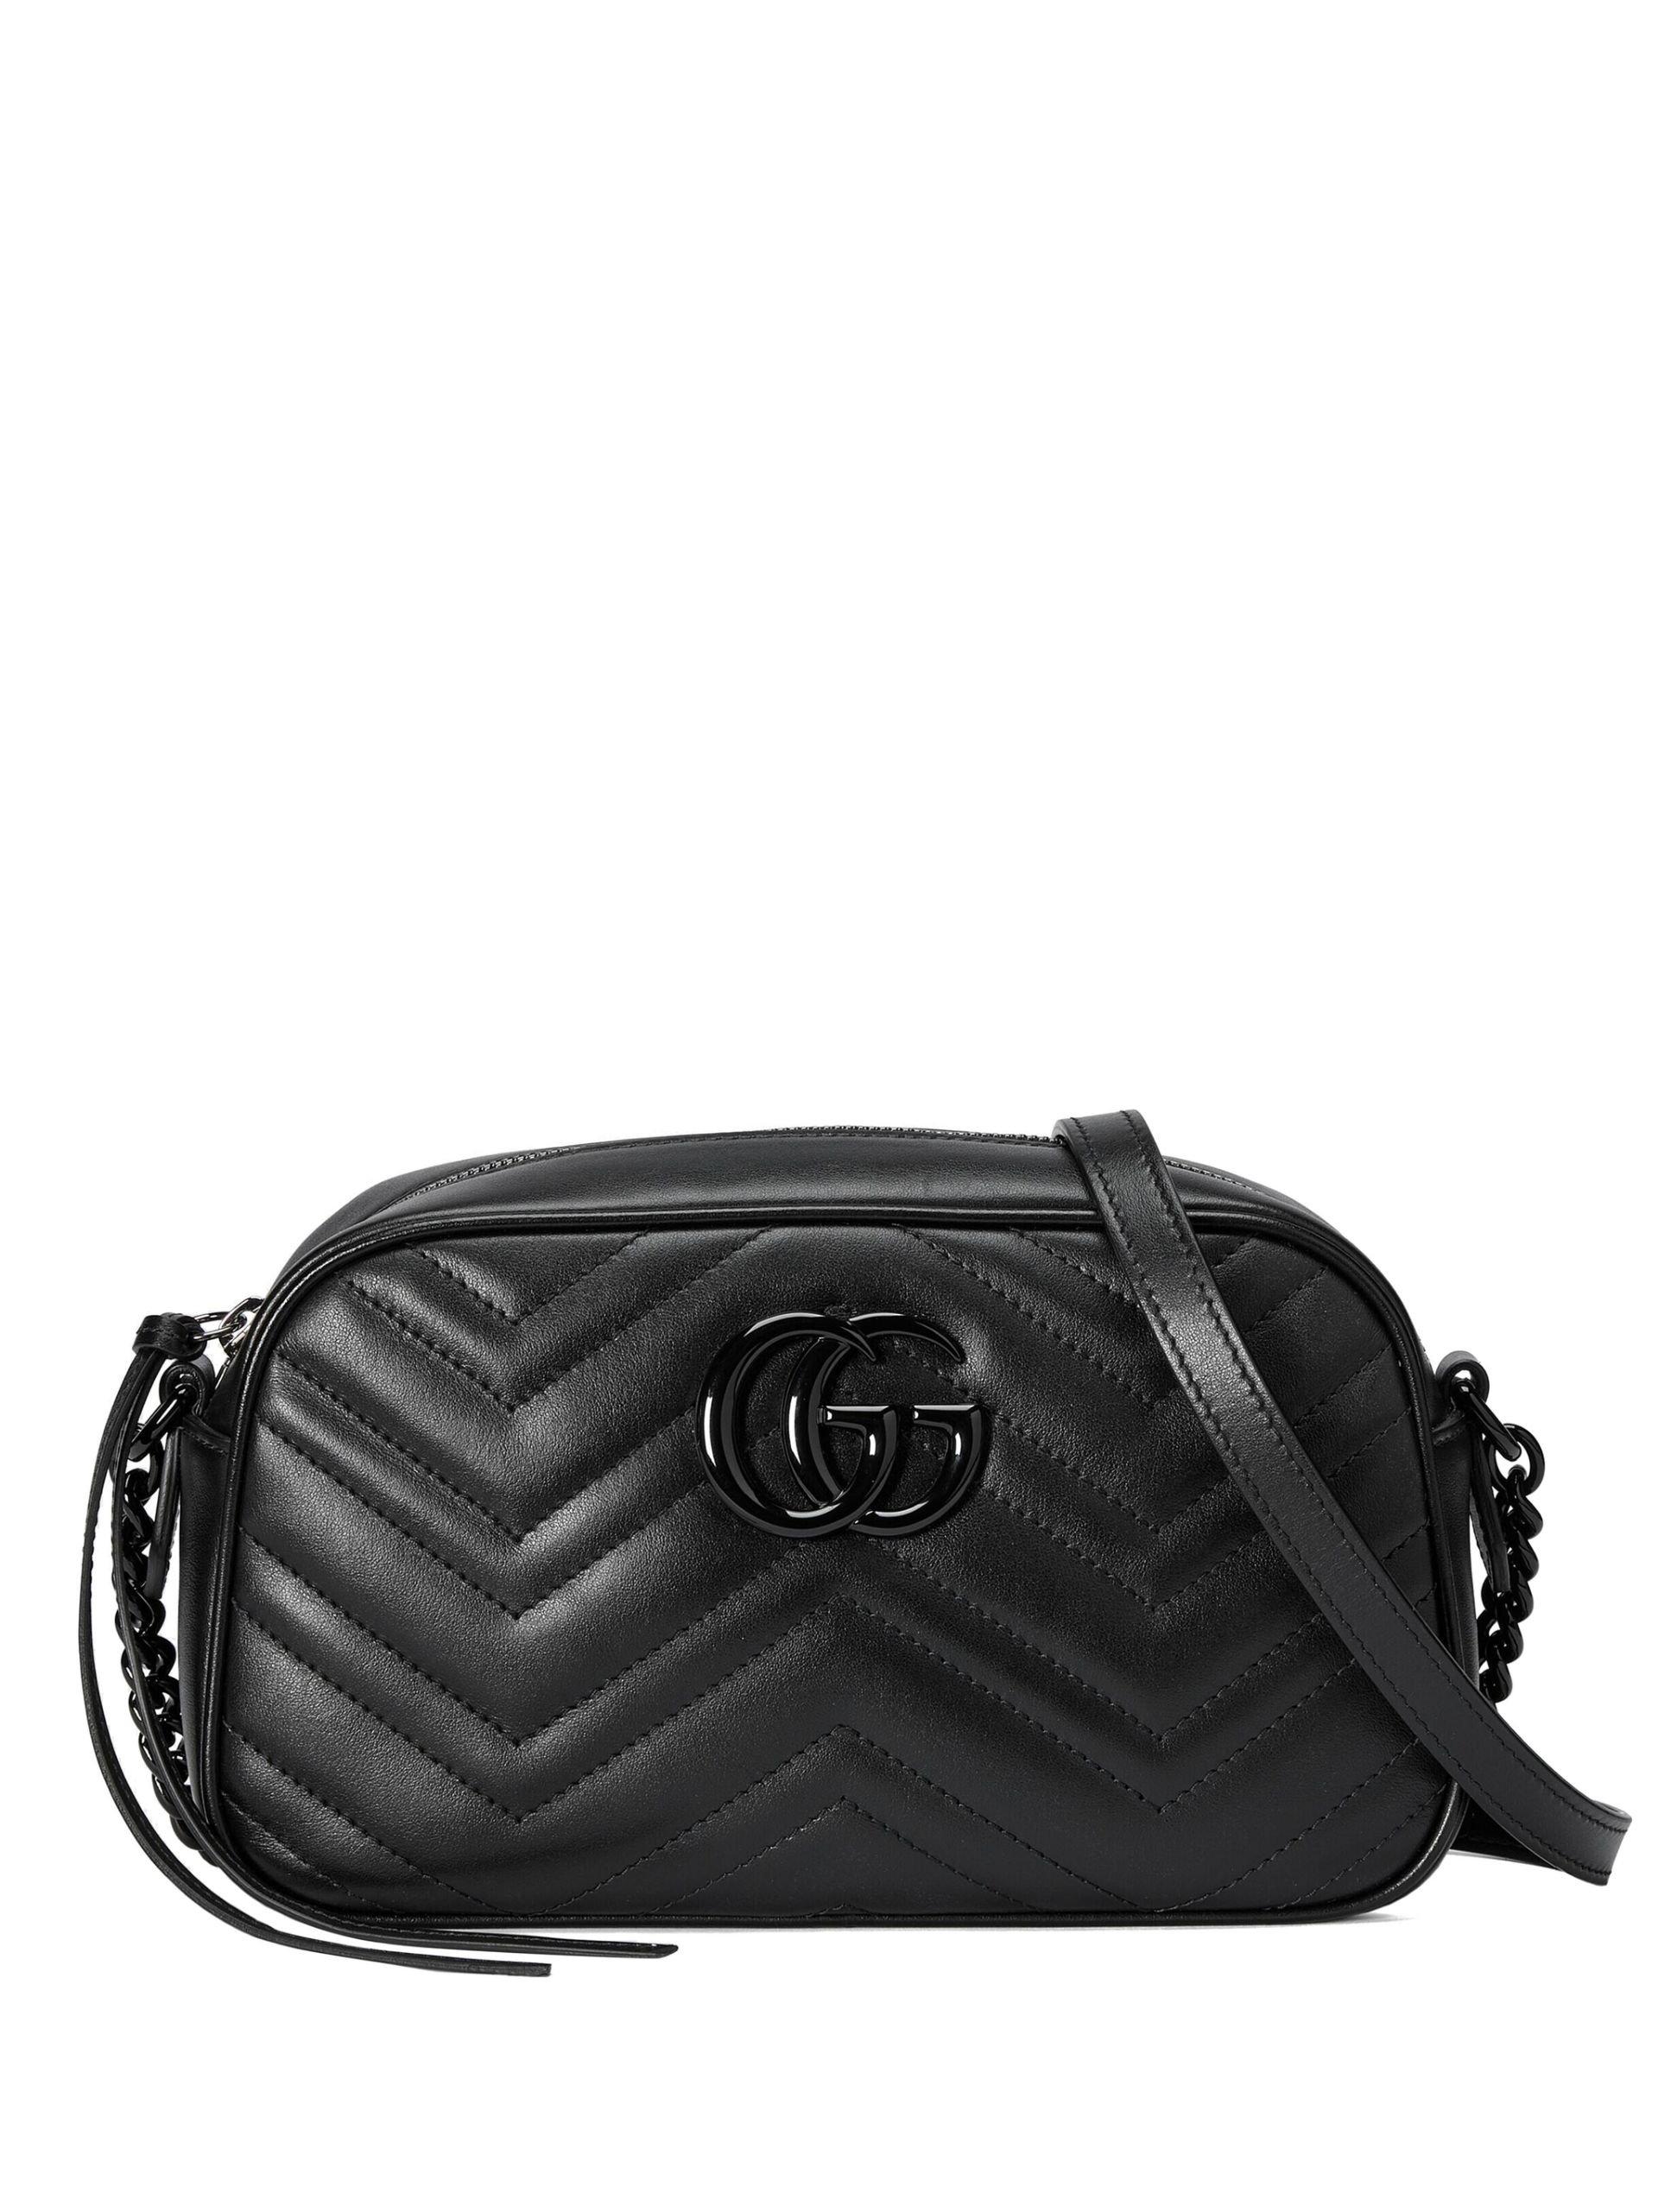 Gucci Black GG Marmont Small Matelassé Leather Shoulder Bag | Lyst